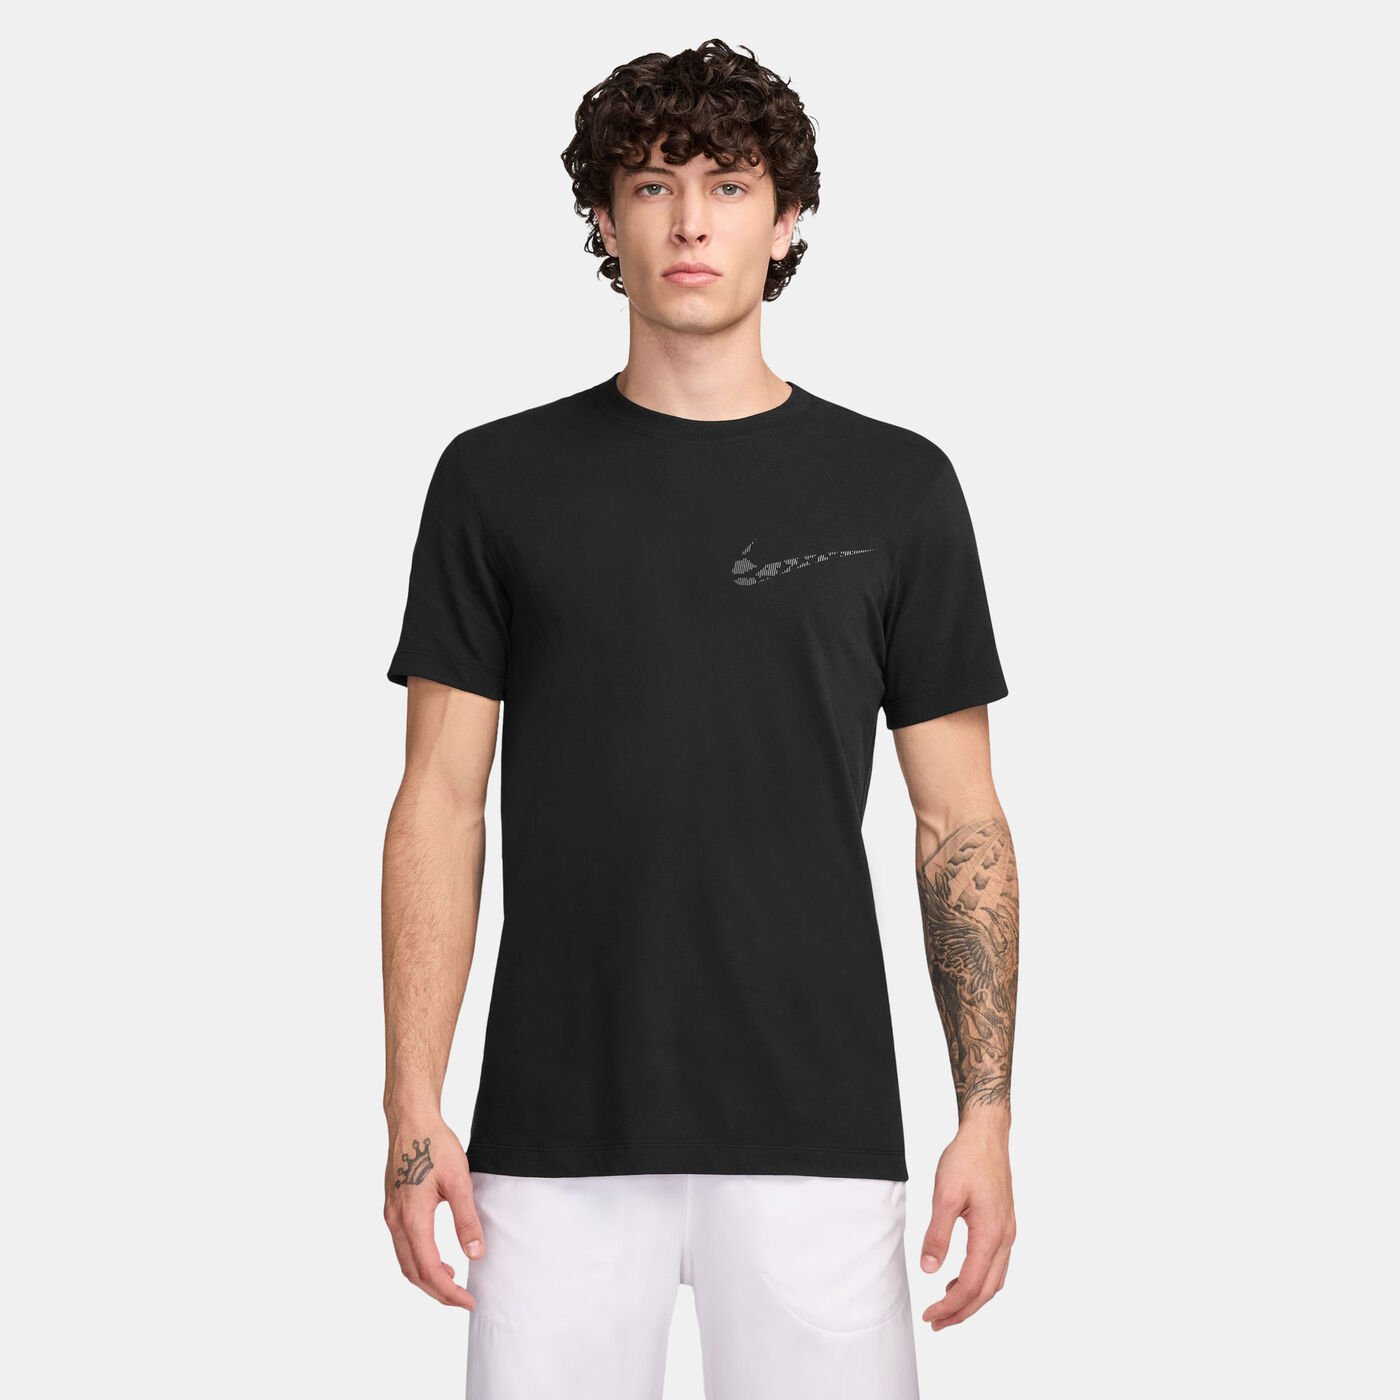 Men's Dri-FIT Running T-Shirt